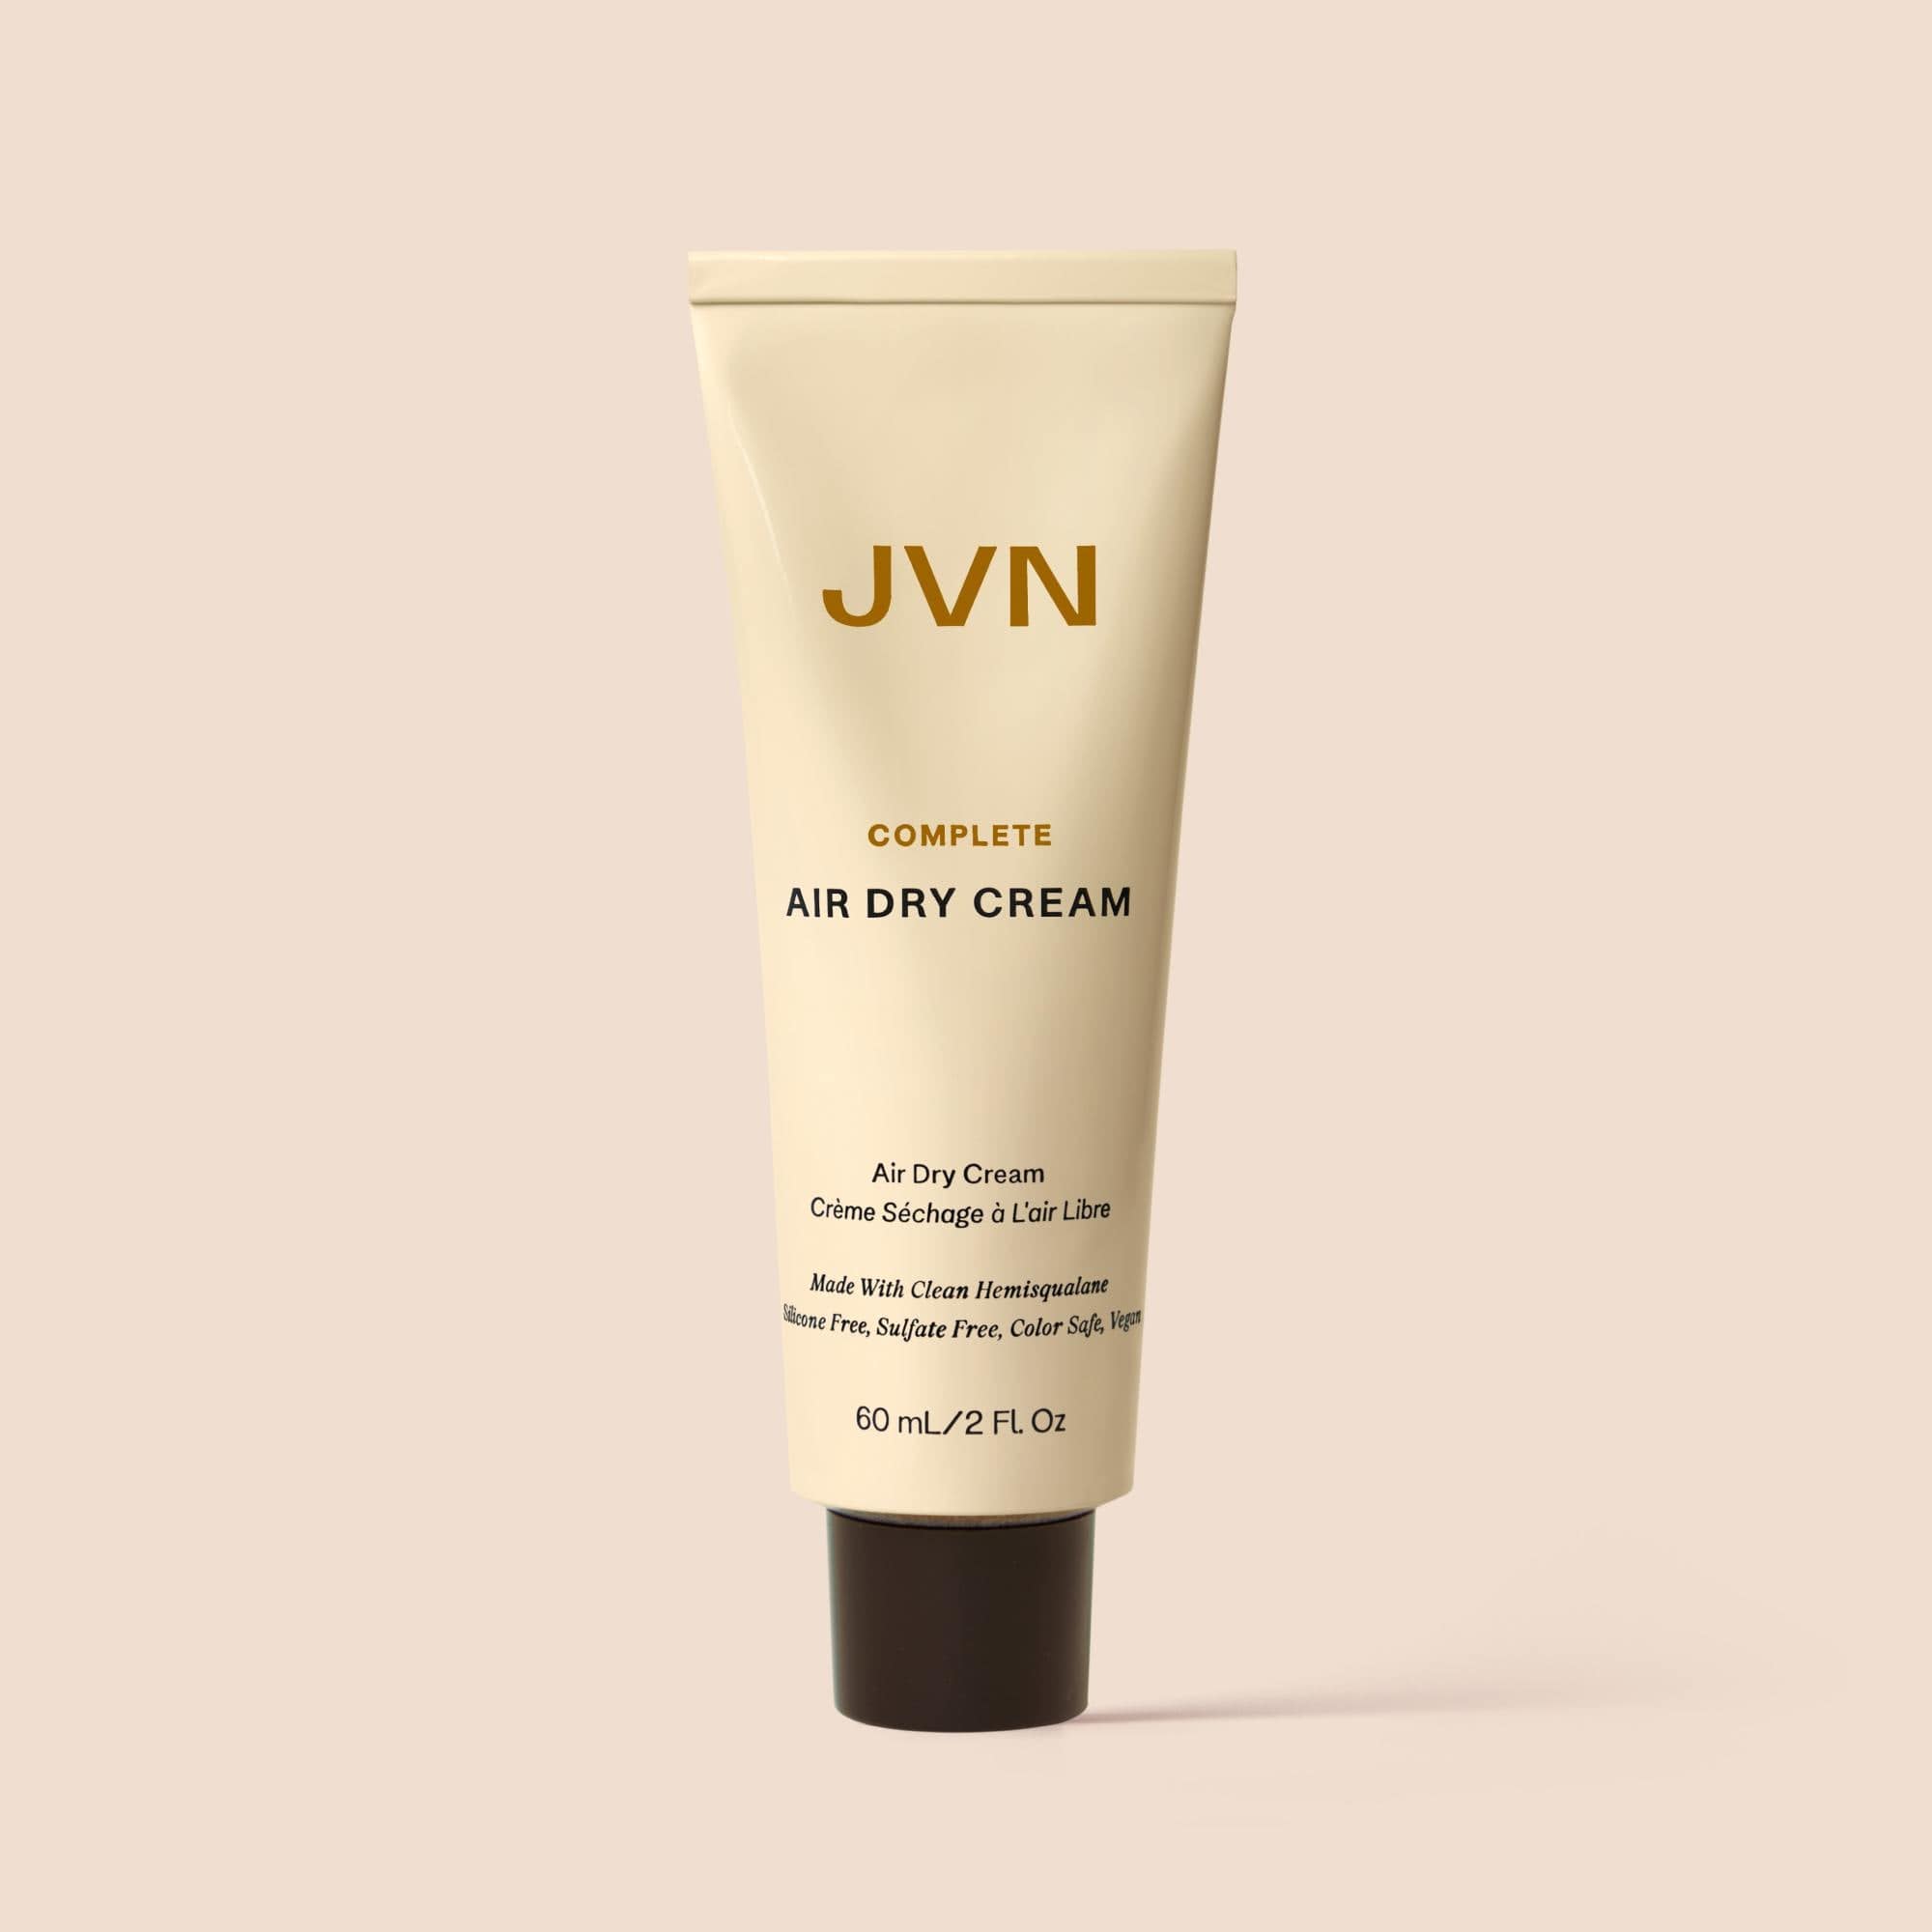 JVN Styler Complete Air Dry Cream Travel Travel Complete Air Dry Cream 2oz 60ml | Silicone-Free Hair Styling Cream | JVN sulfate-free silicone-free sustainable